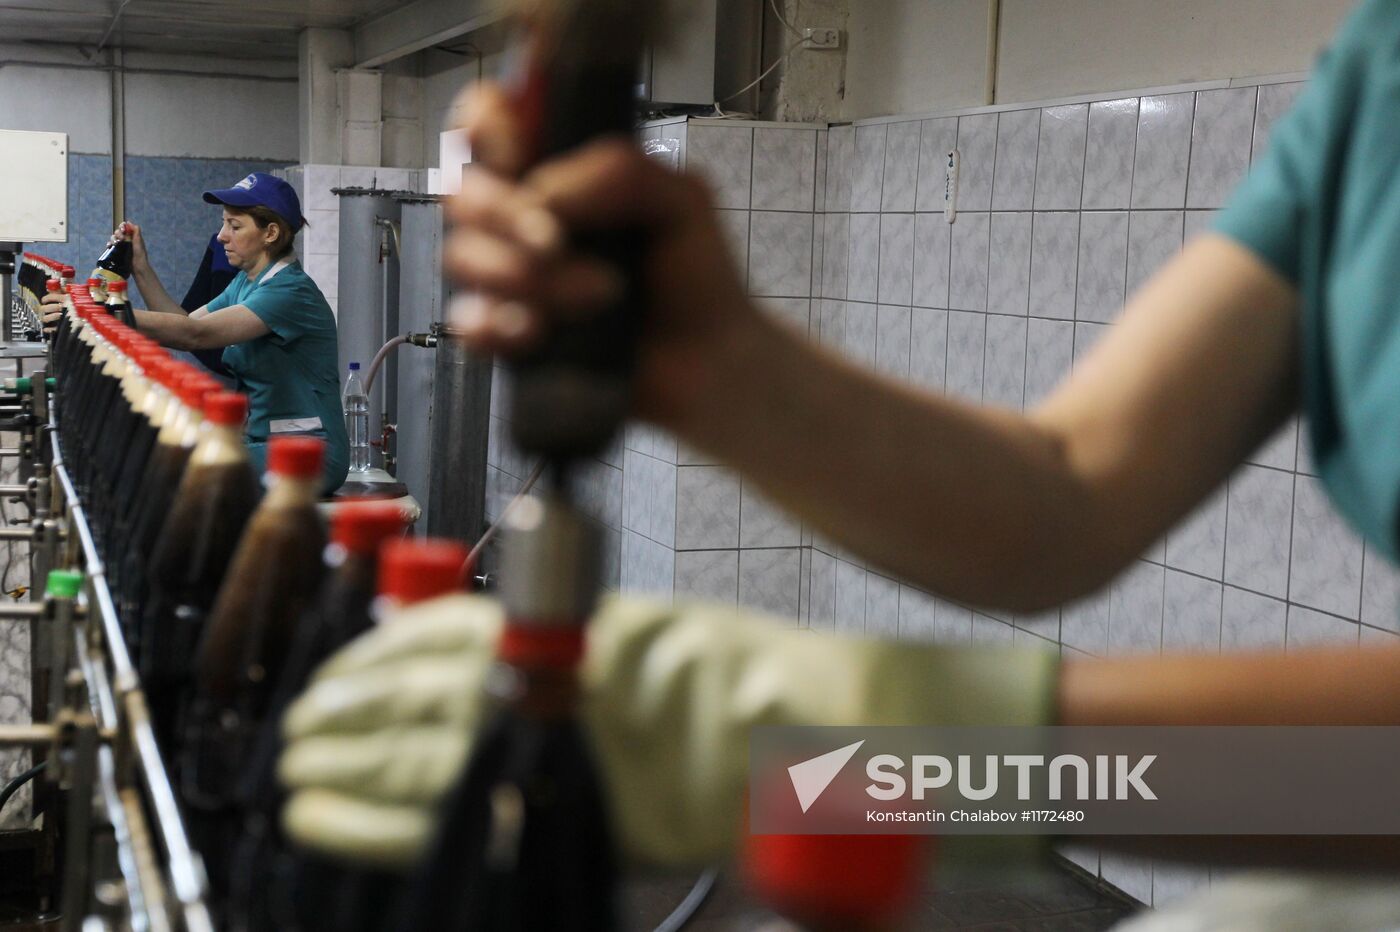 Soft drinks factory "Uspolon"